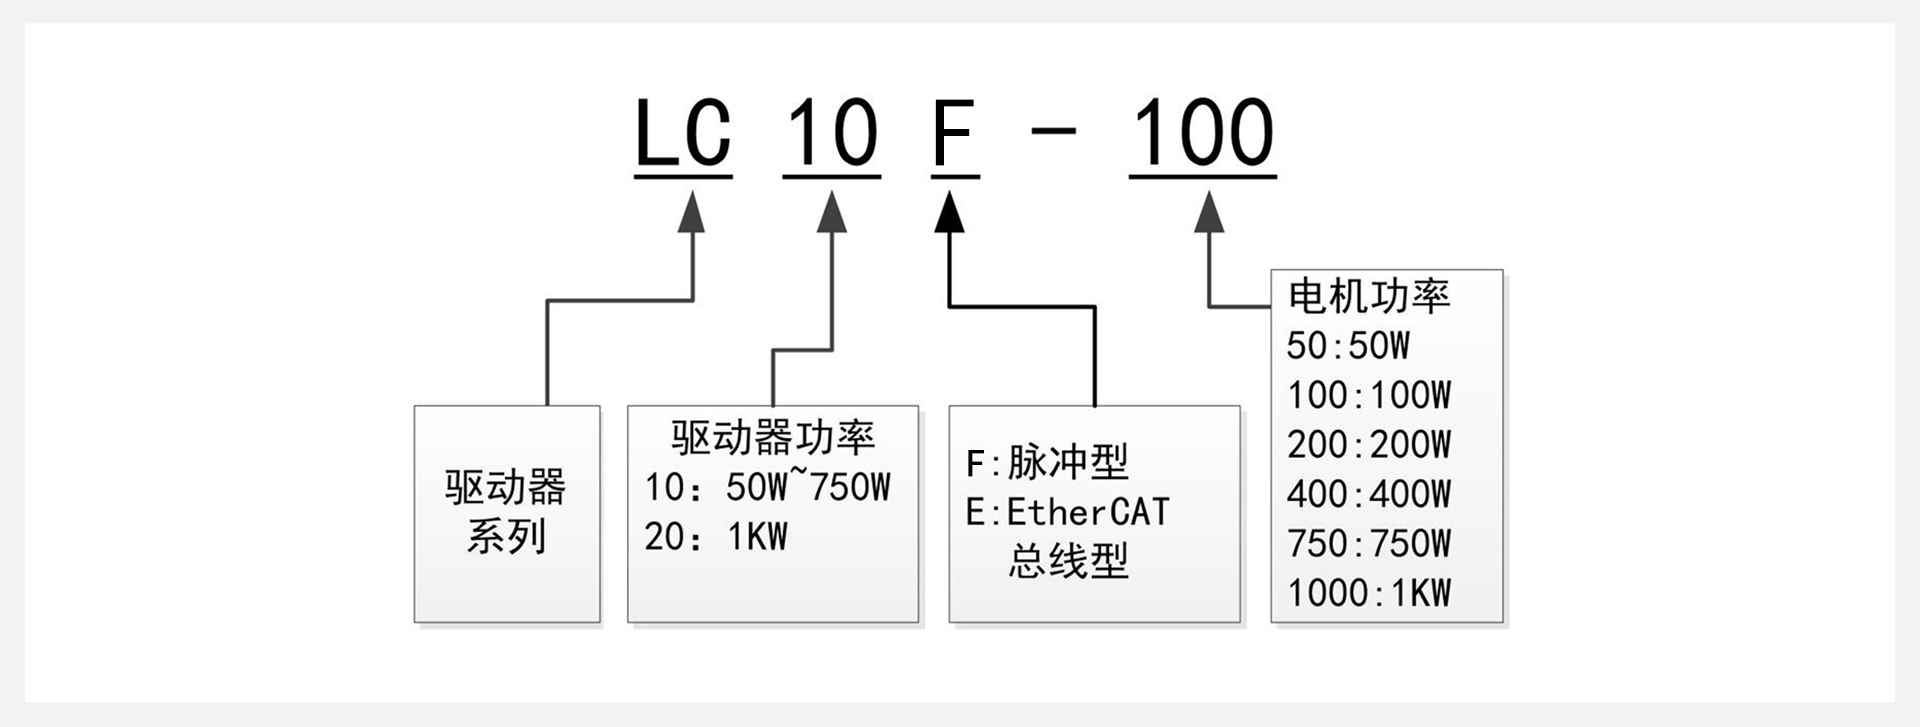 LC10F 系列交流伺服驱动器